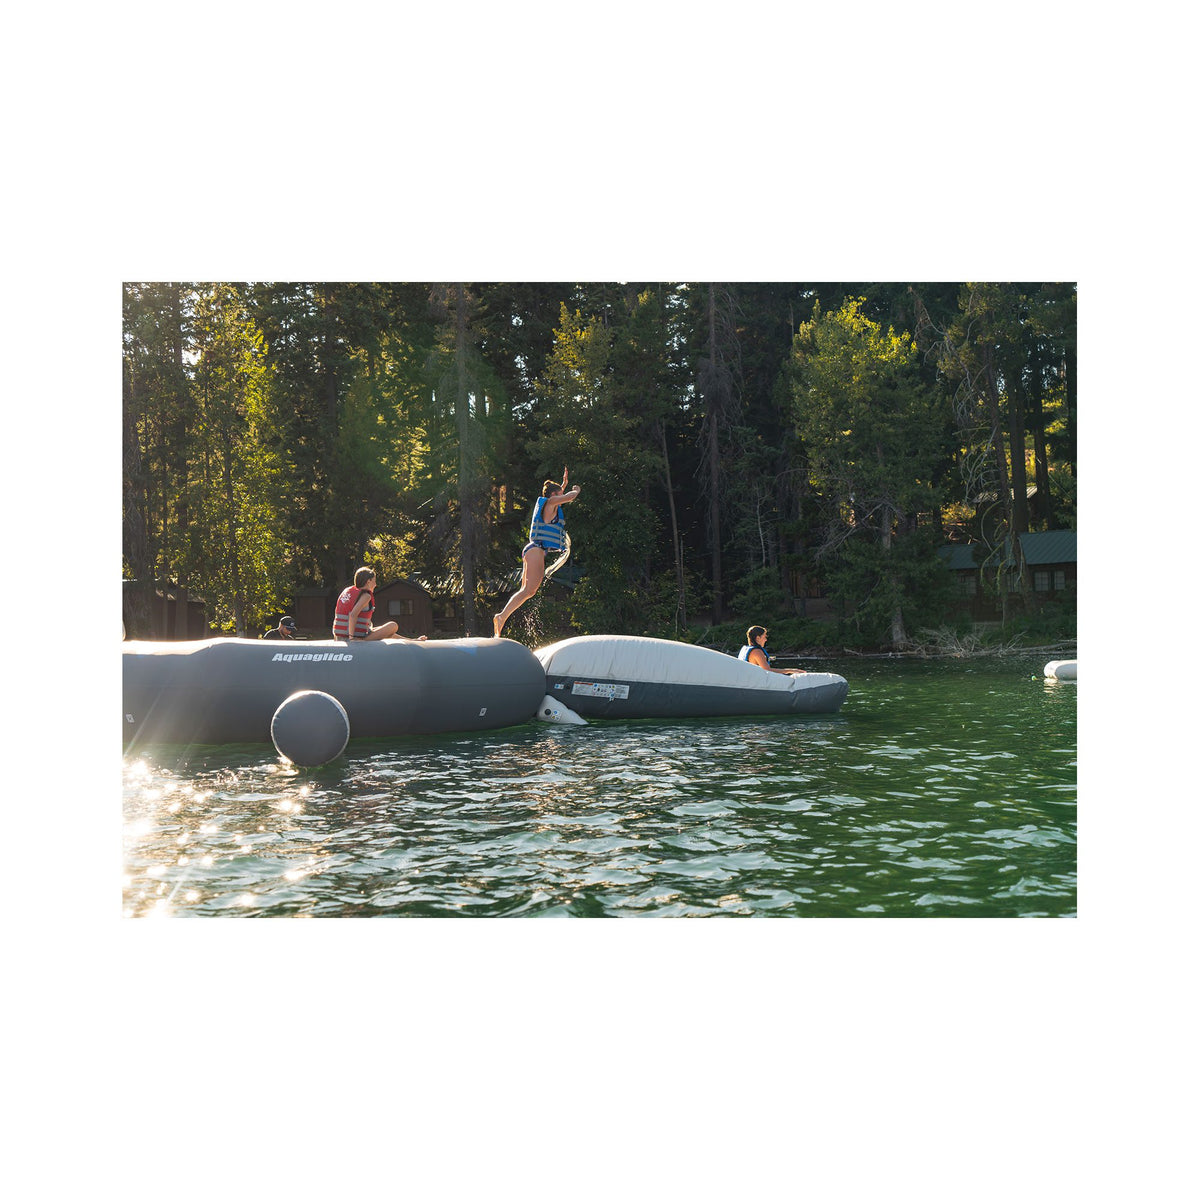 Aquaglide Ricochet Water Bouncer 16.0 with C-Deck Boarding Platform